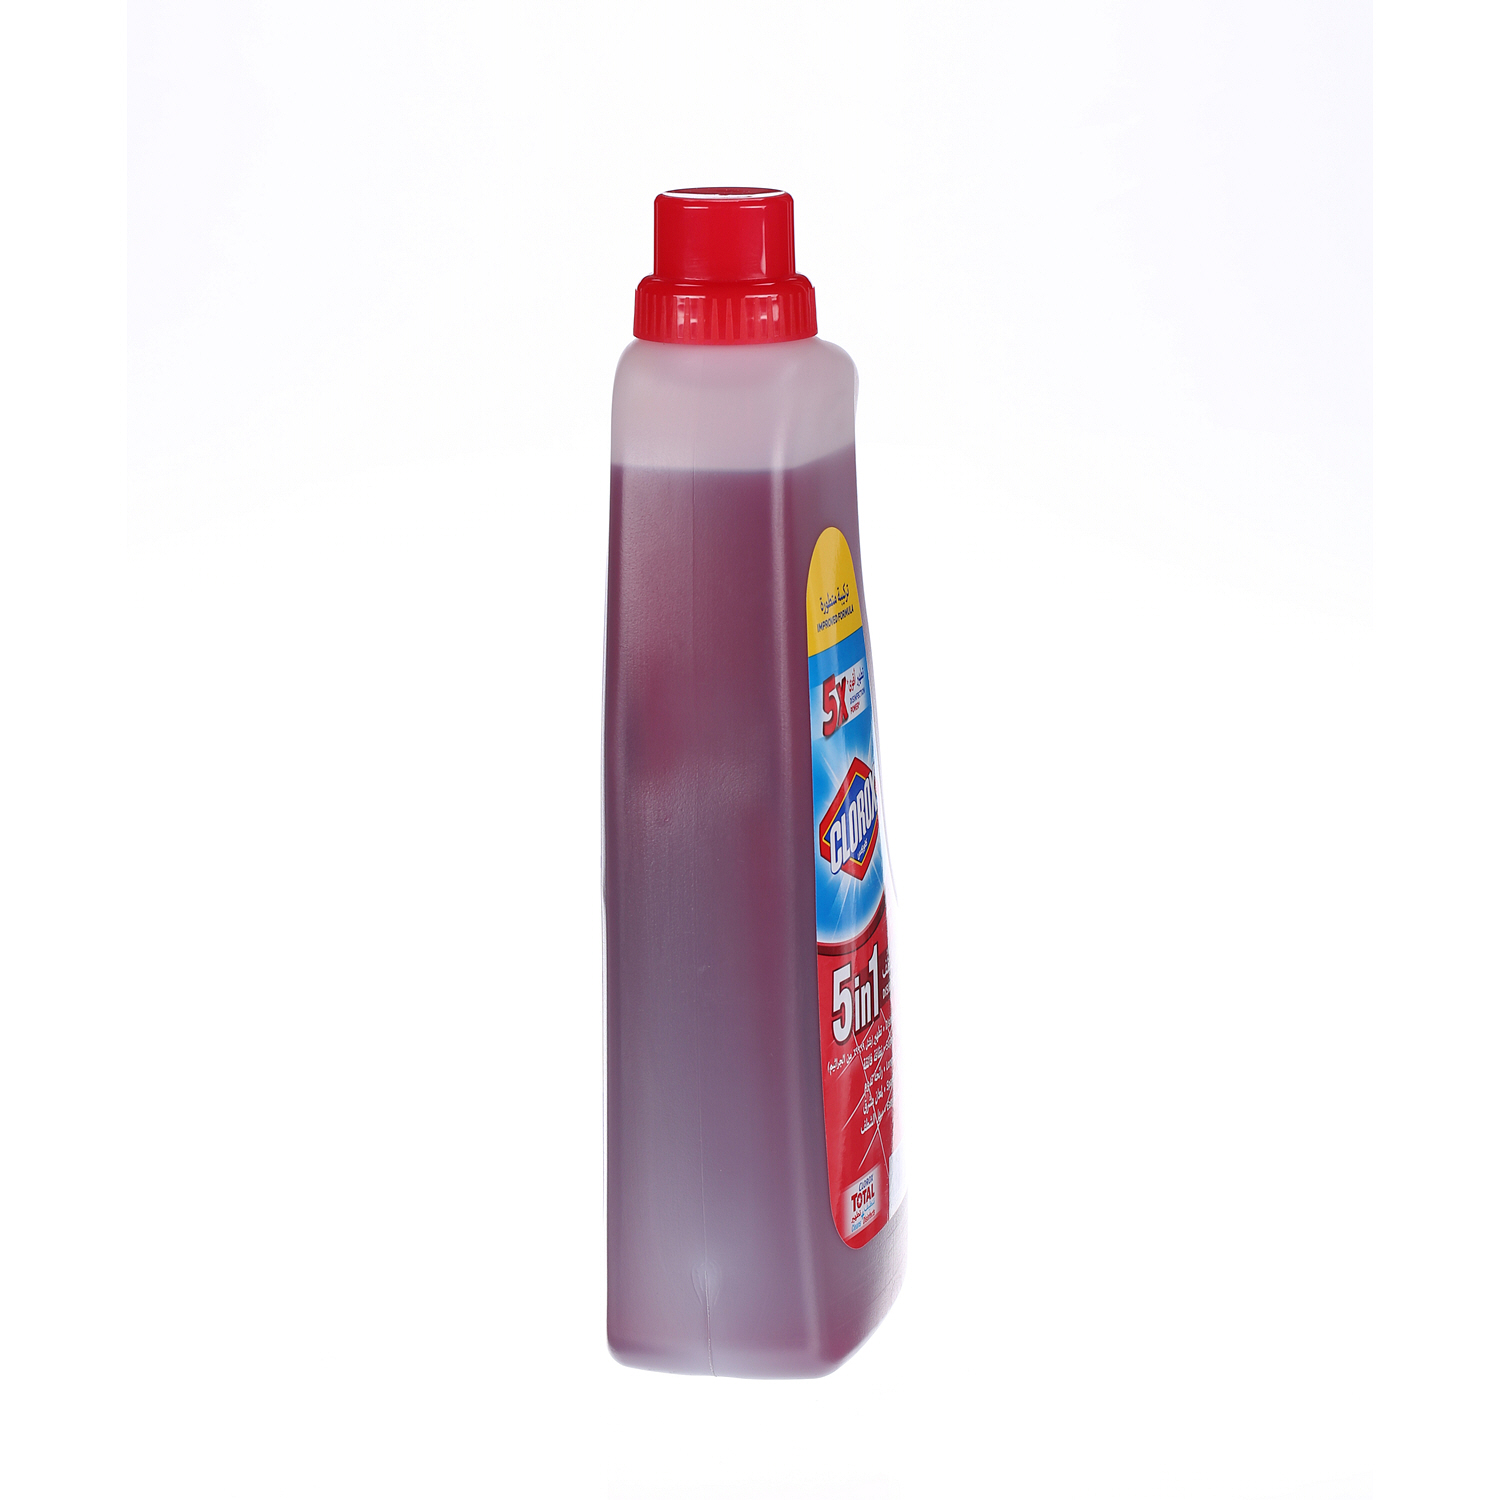 Clorox Disinfectant Cleaner non Bleach Rose 1.5 L